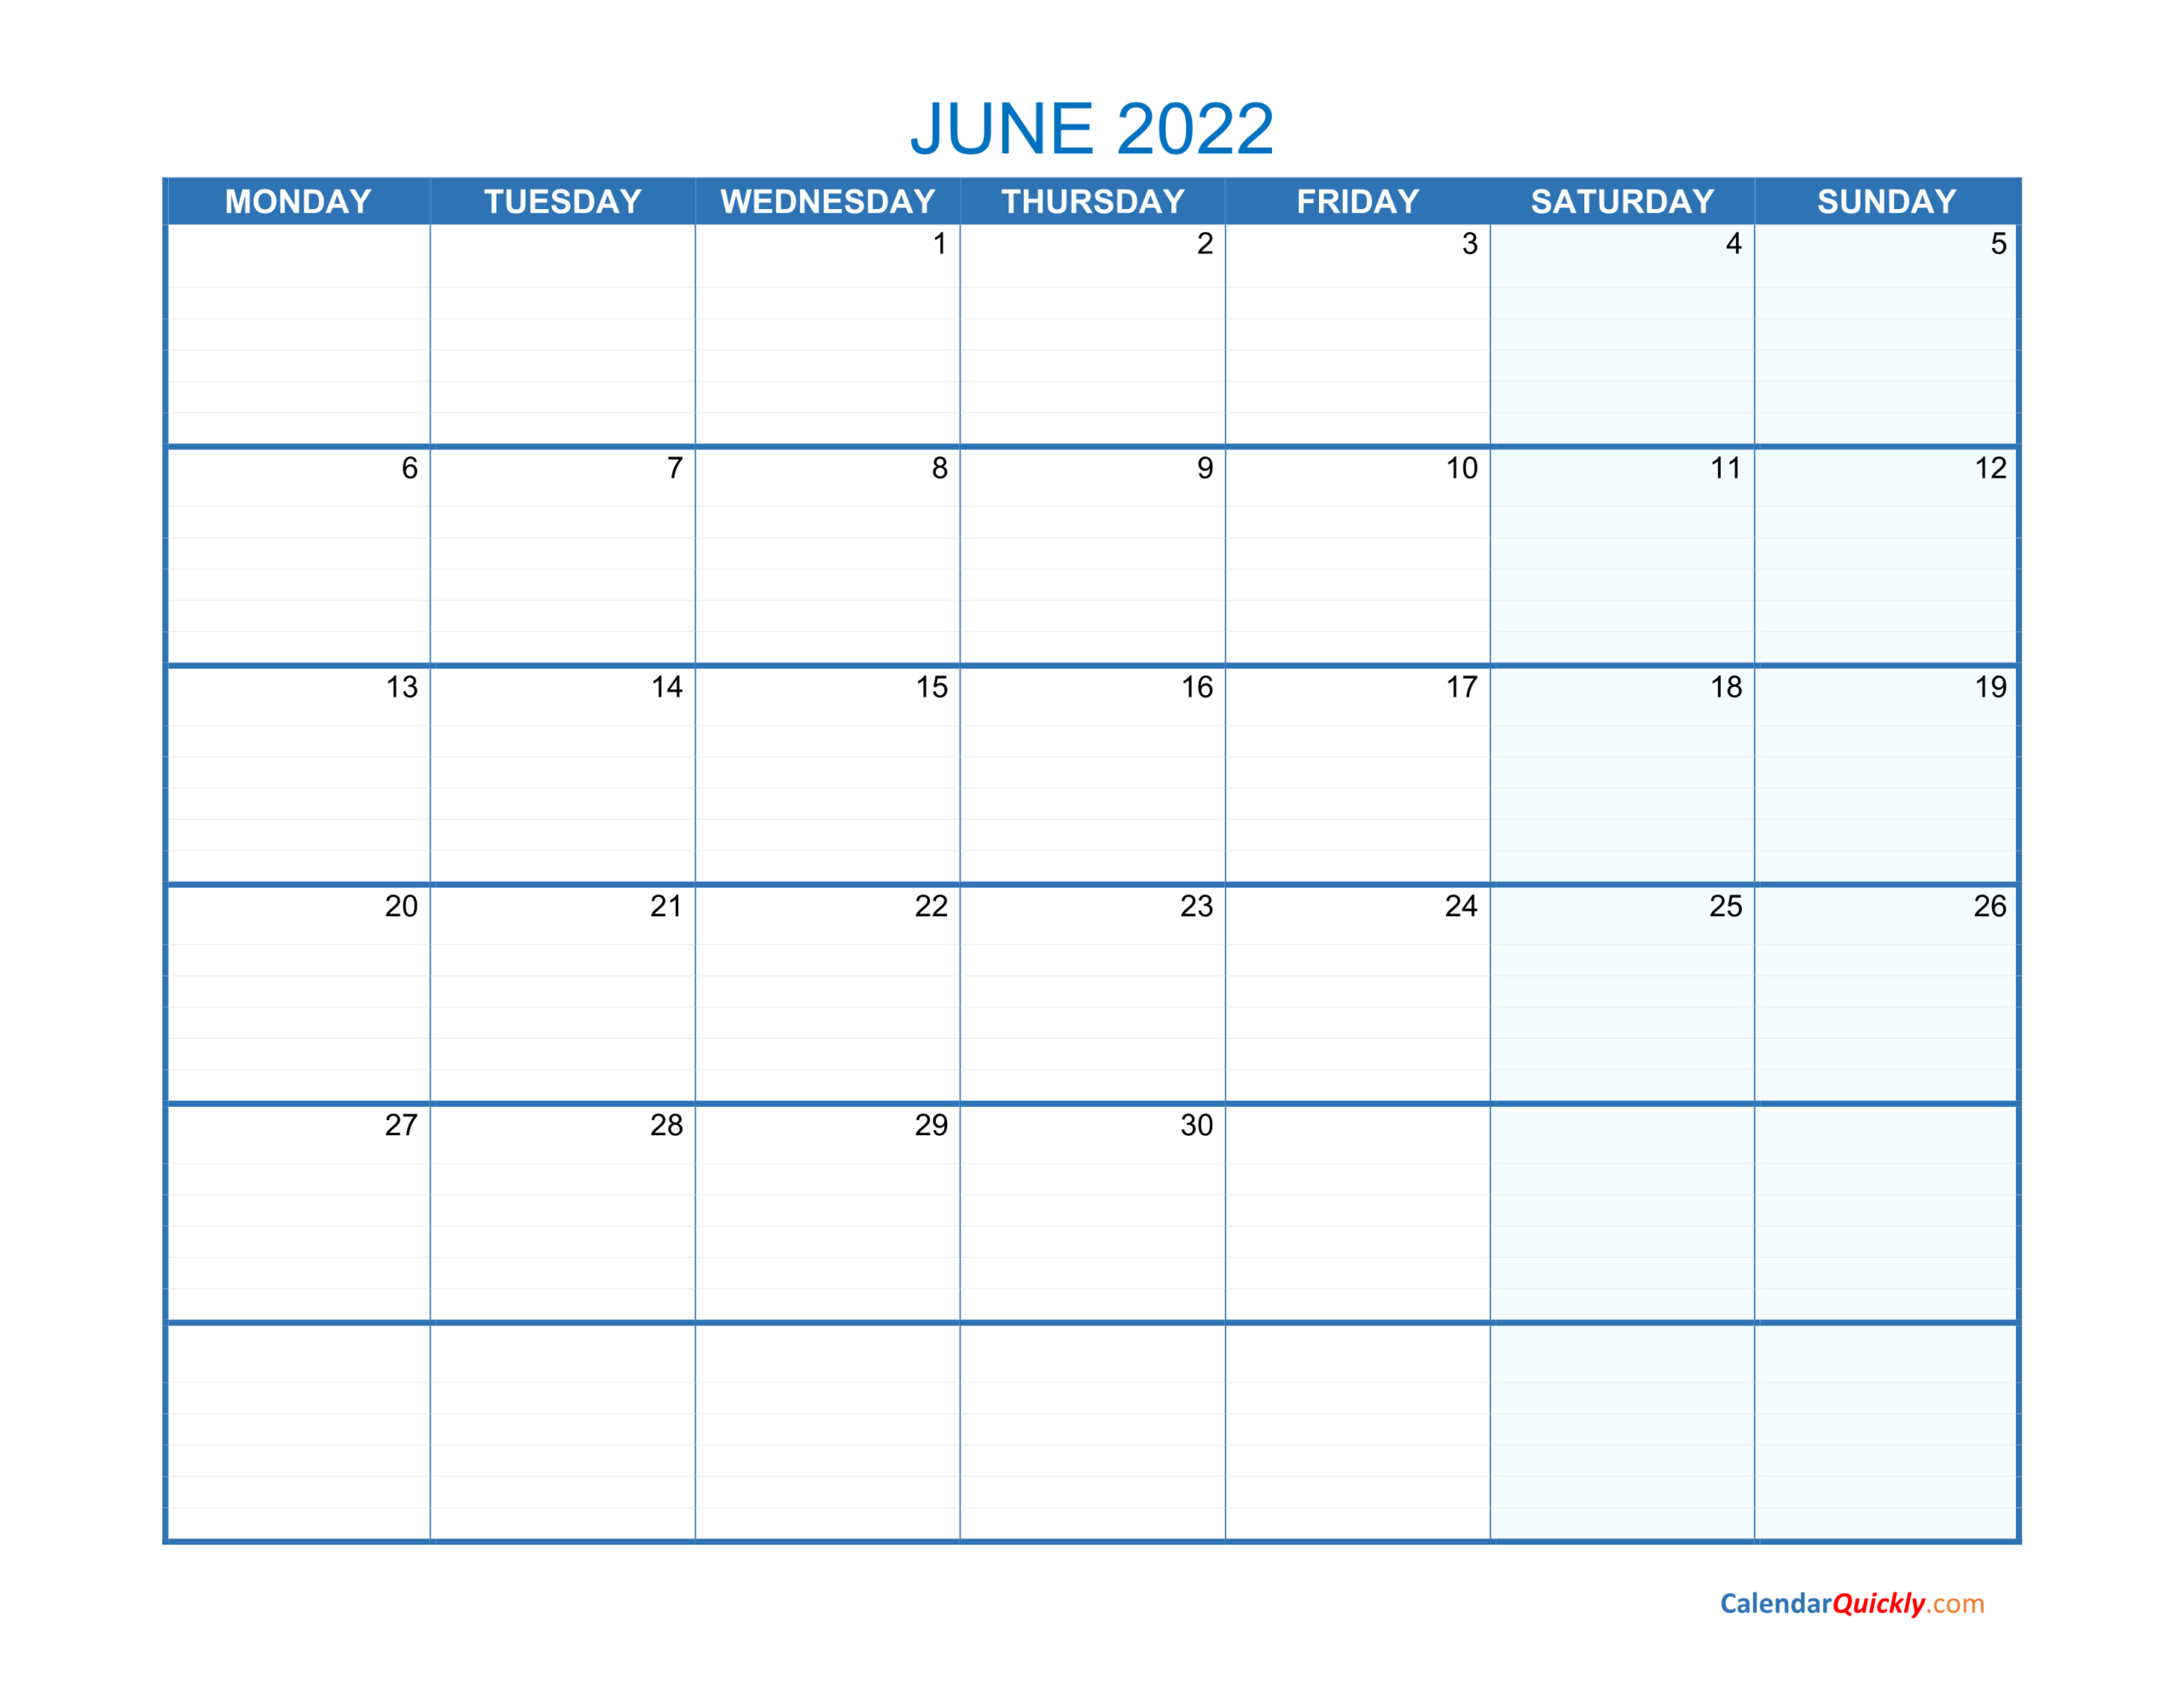 June Monday 2022 Blank Calendar | Calendar Quickly